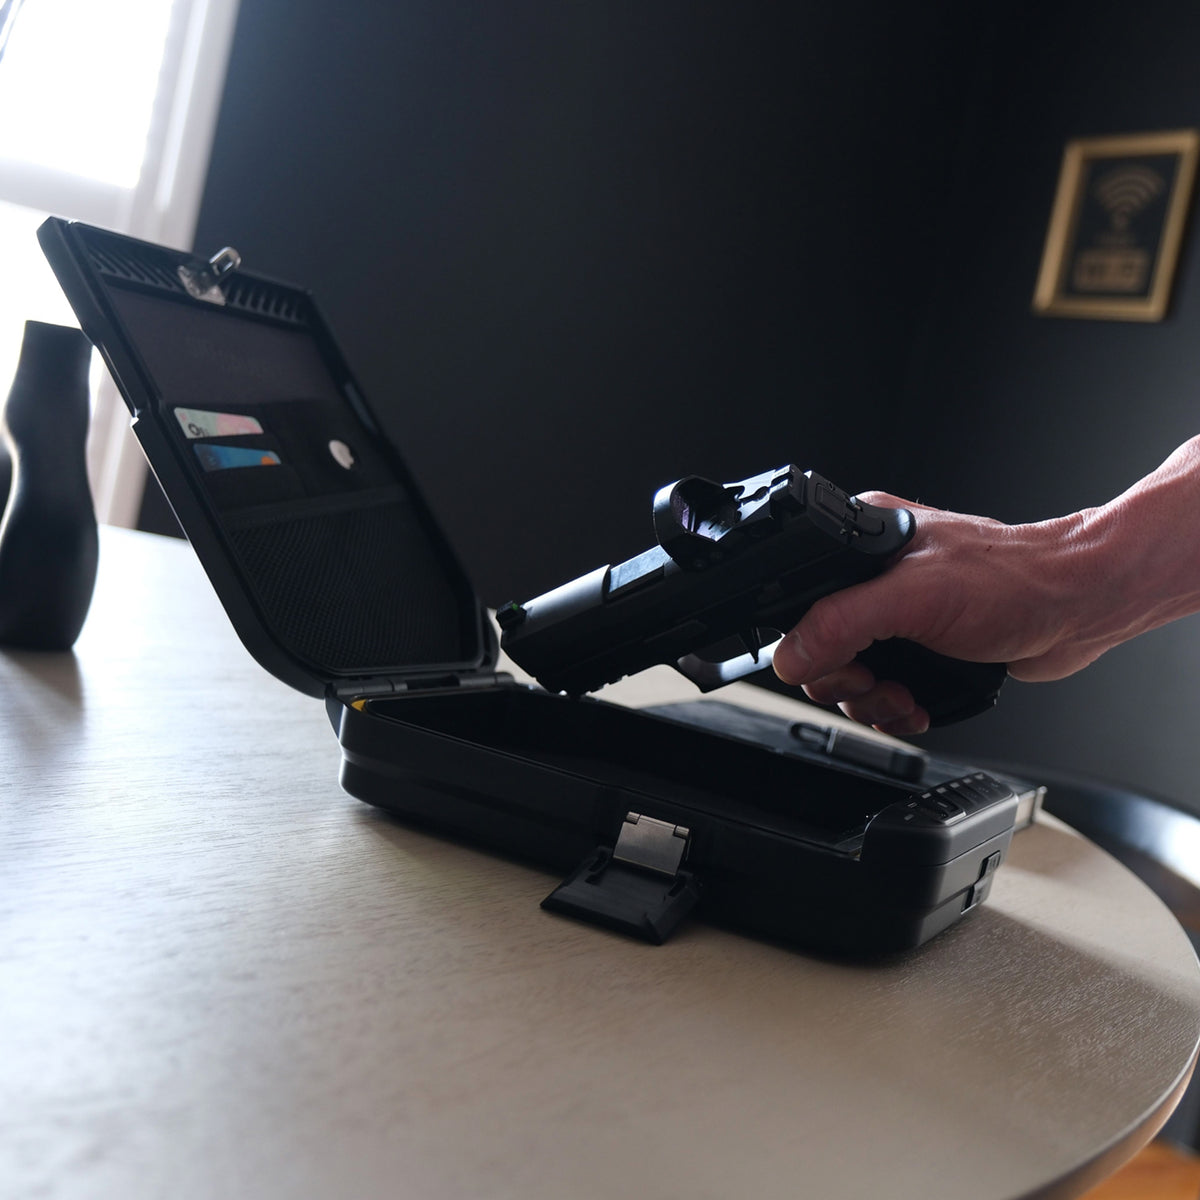 Vaultek Sig Sauer LifePod Biometric Rugged Weather Resistant Lockbox Grabbing Handgun